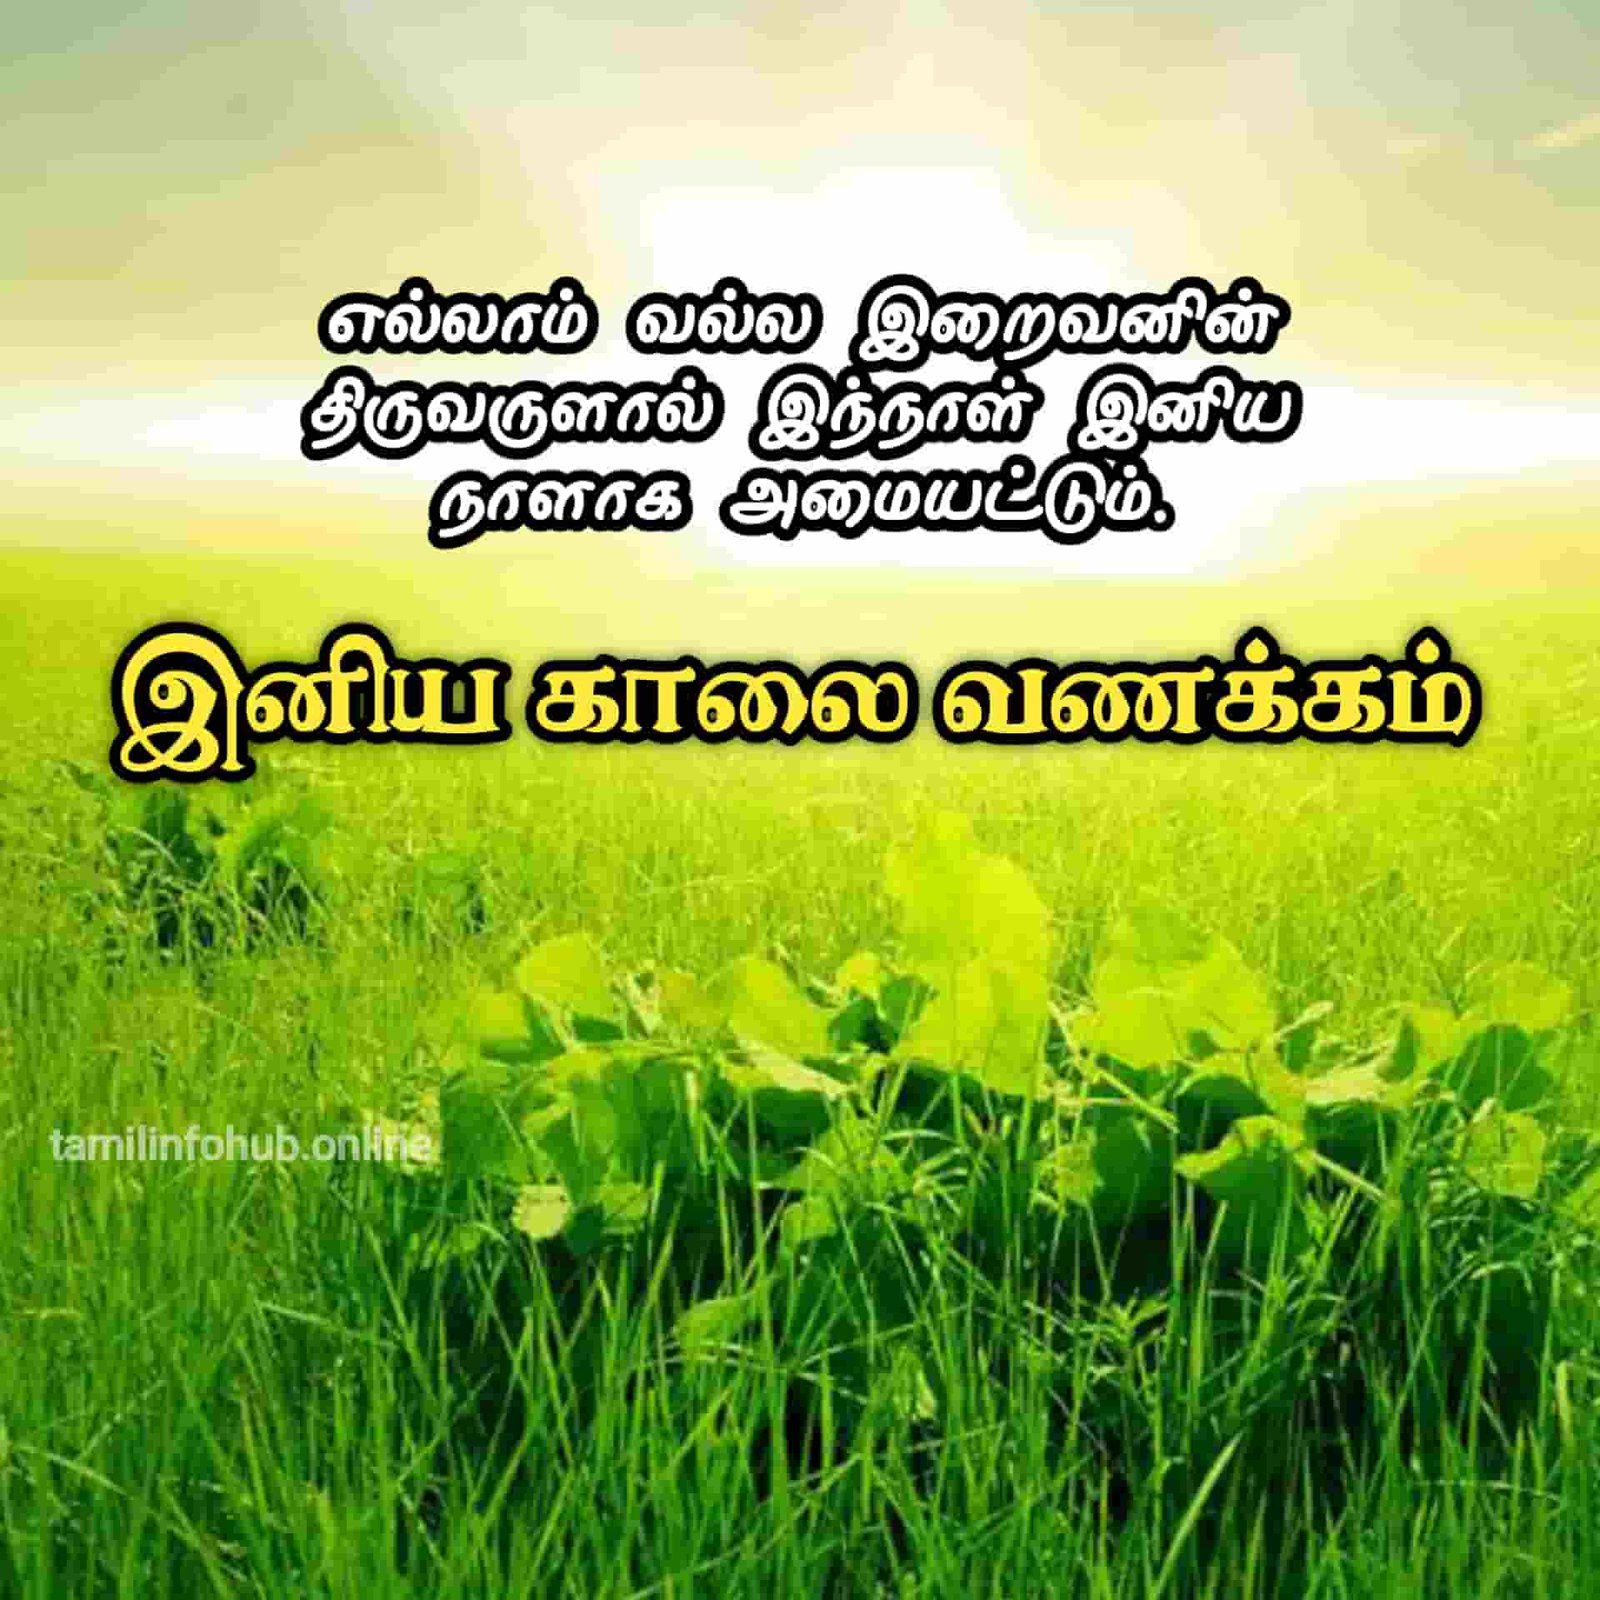 Good Morning Tamil